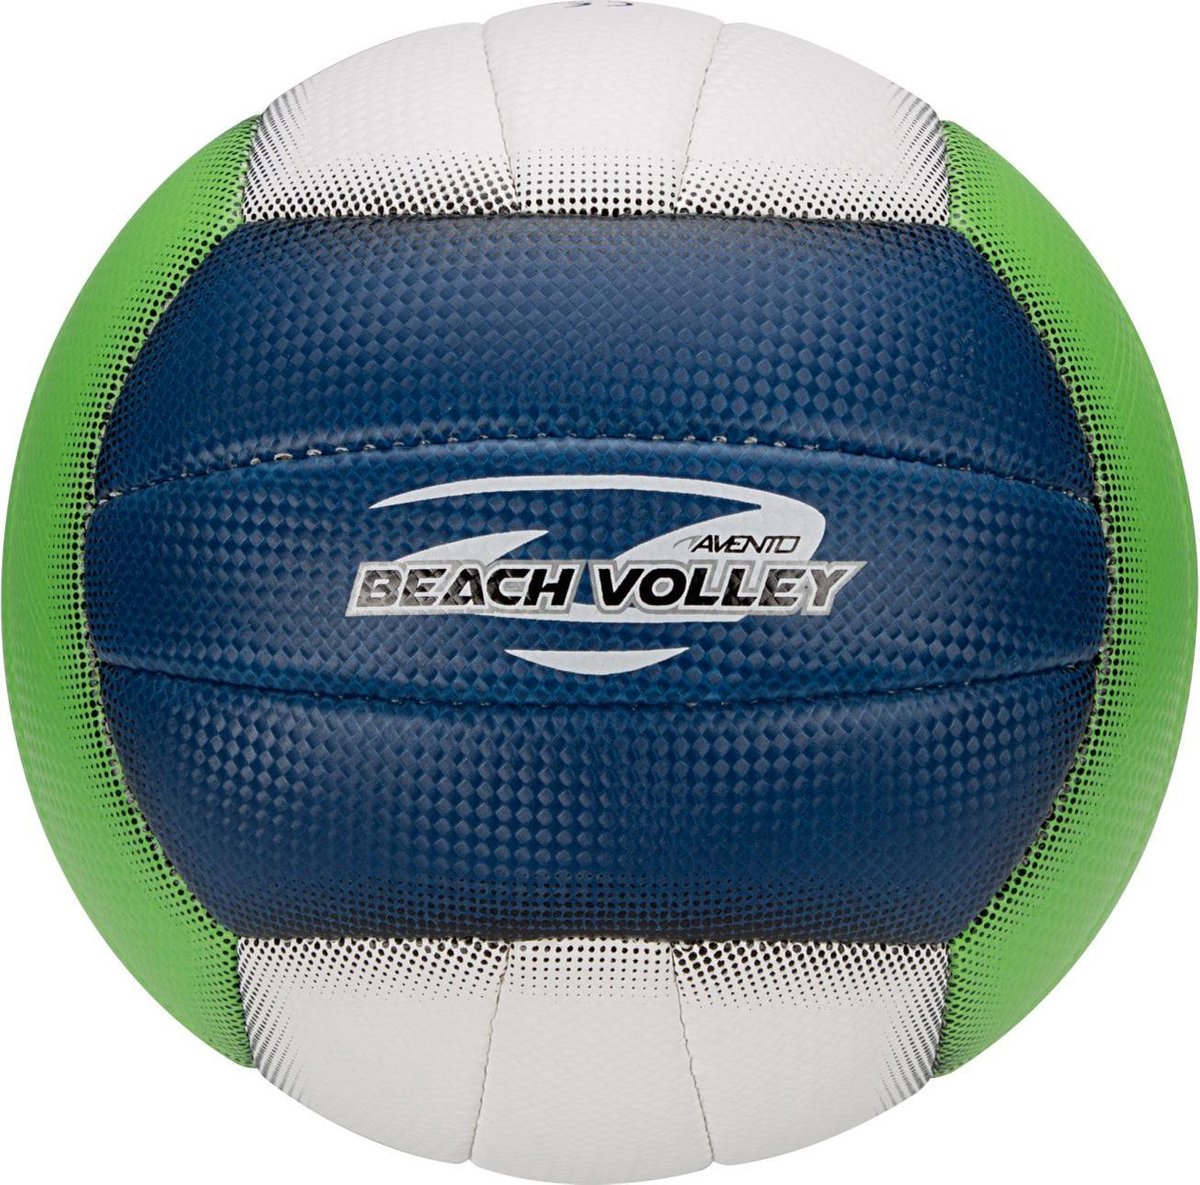 Billede af Avento Beach Volleyball Grøn/Blå/Hvid - Beachvolleyball i standard størrelse - HURTIG LEVERING